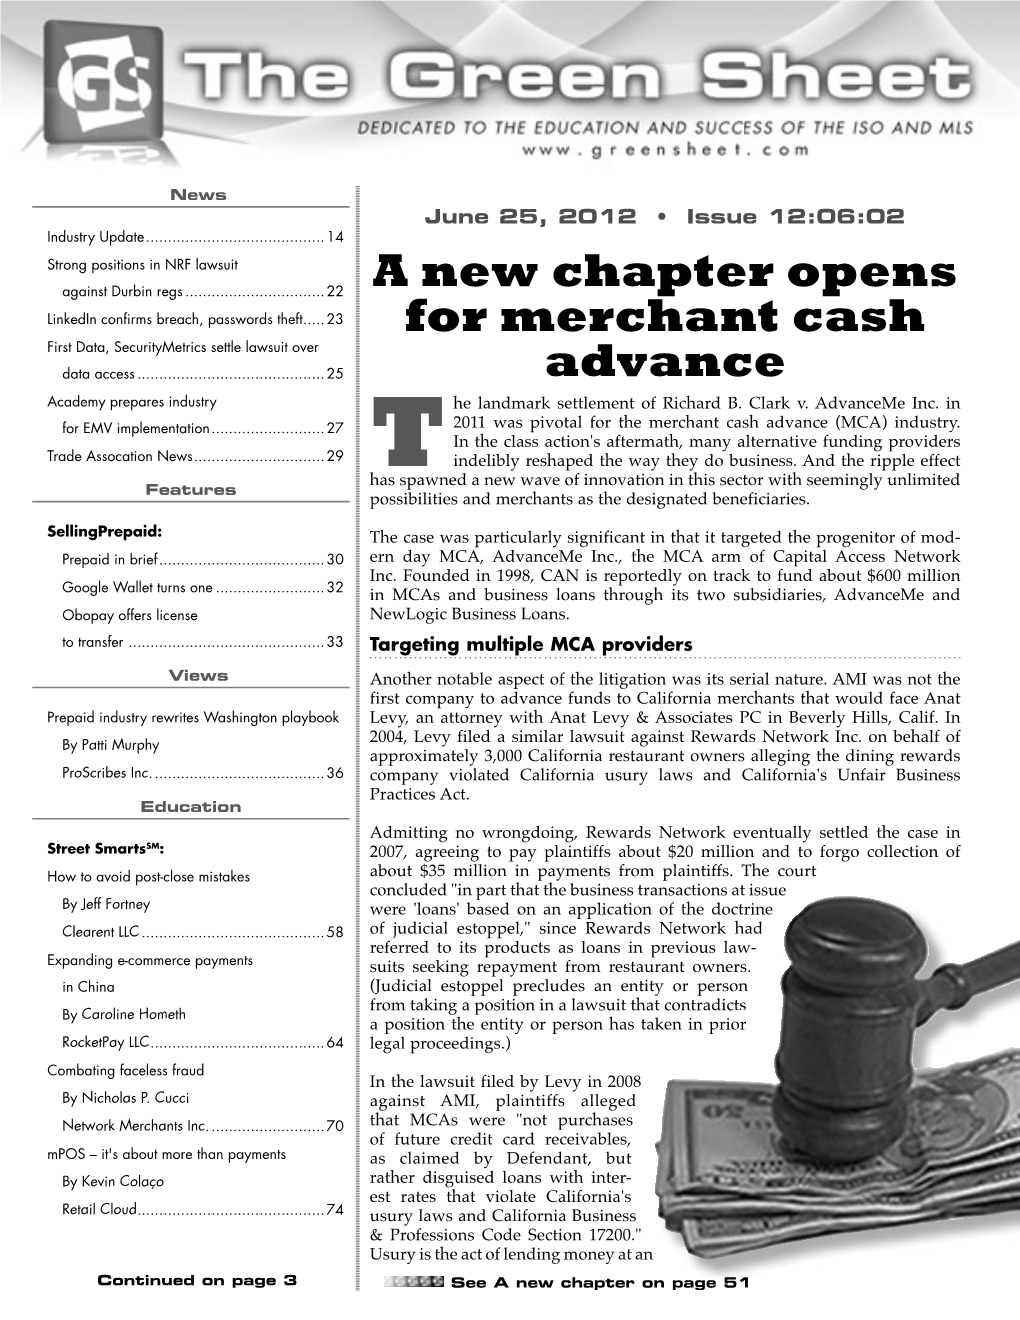 A New Chapter Opens for Merchant Cash Advance